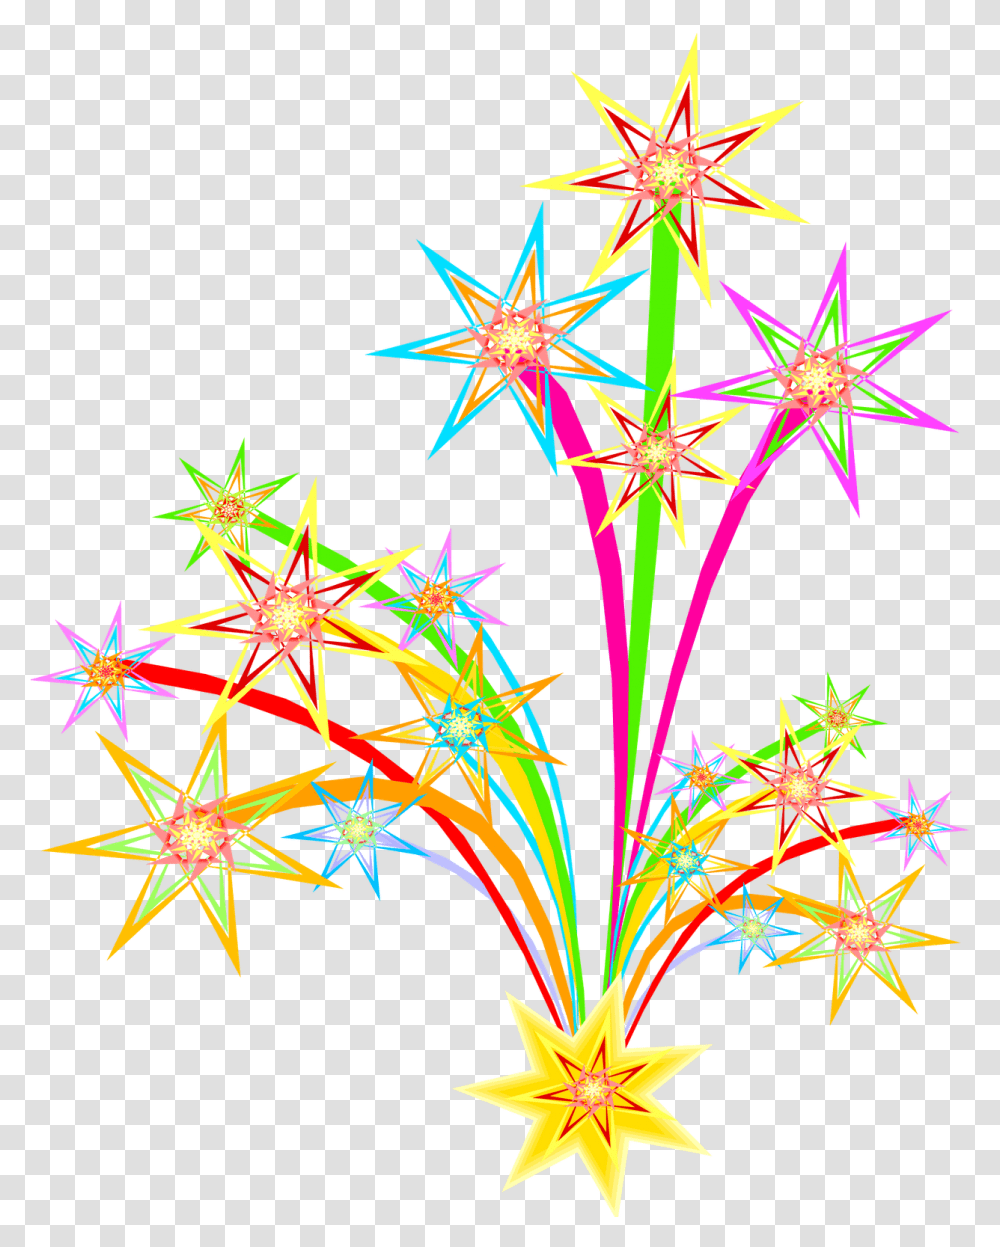 Fireworks Picture Image Clipart Fireworks Animation, Ornament, Pattern, Fractal Transparent Png